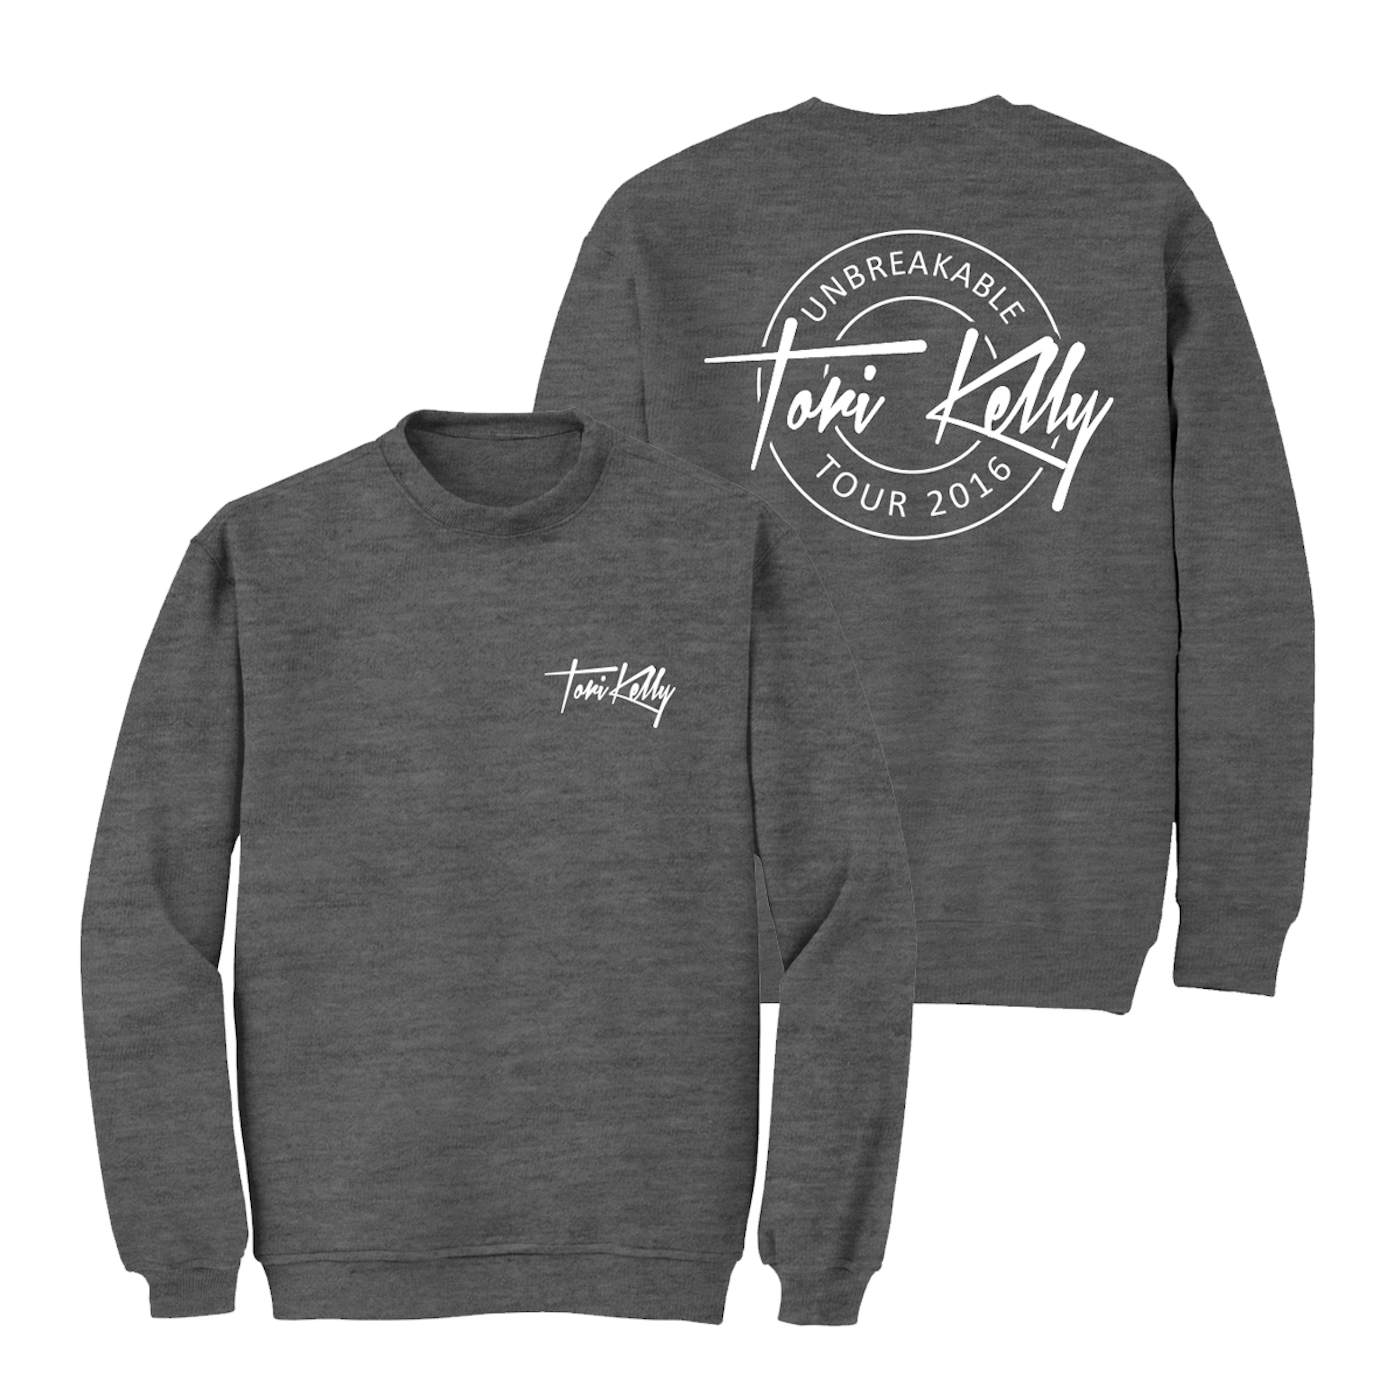 Tori Kelly Unbreakable Sweatshirt